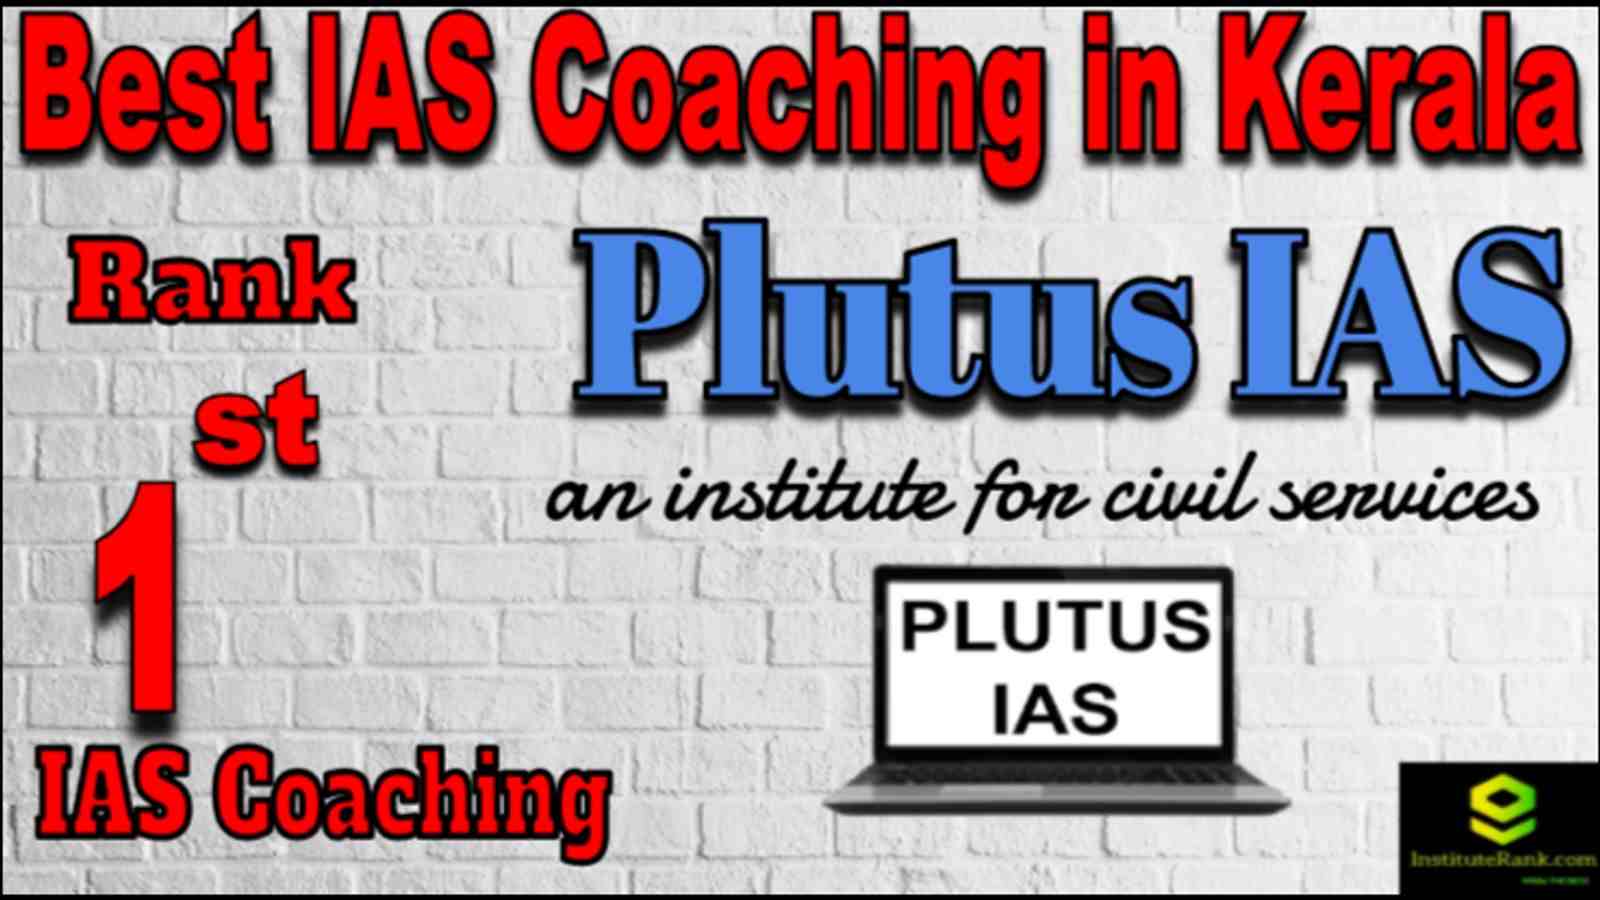 Rank 1 Best IAS coaching in Kerala